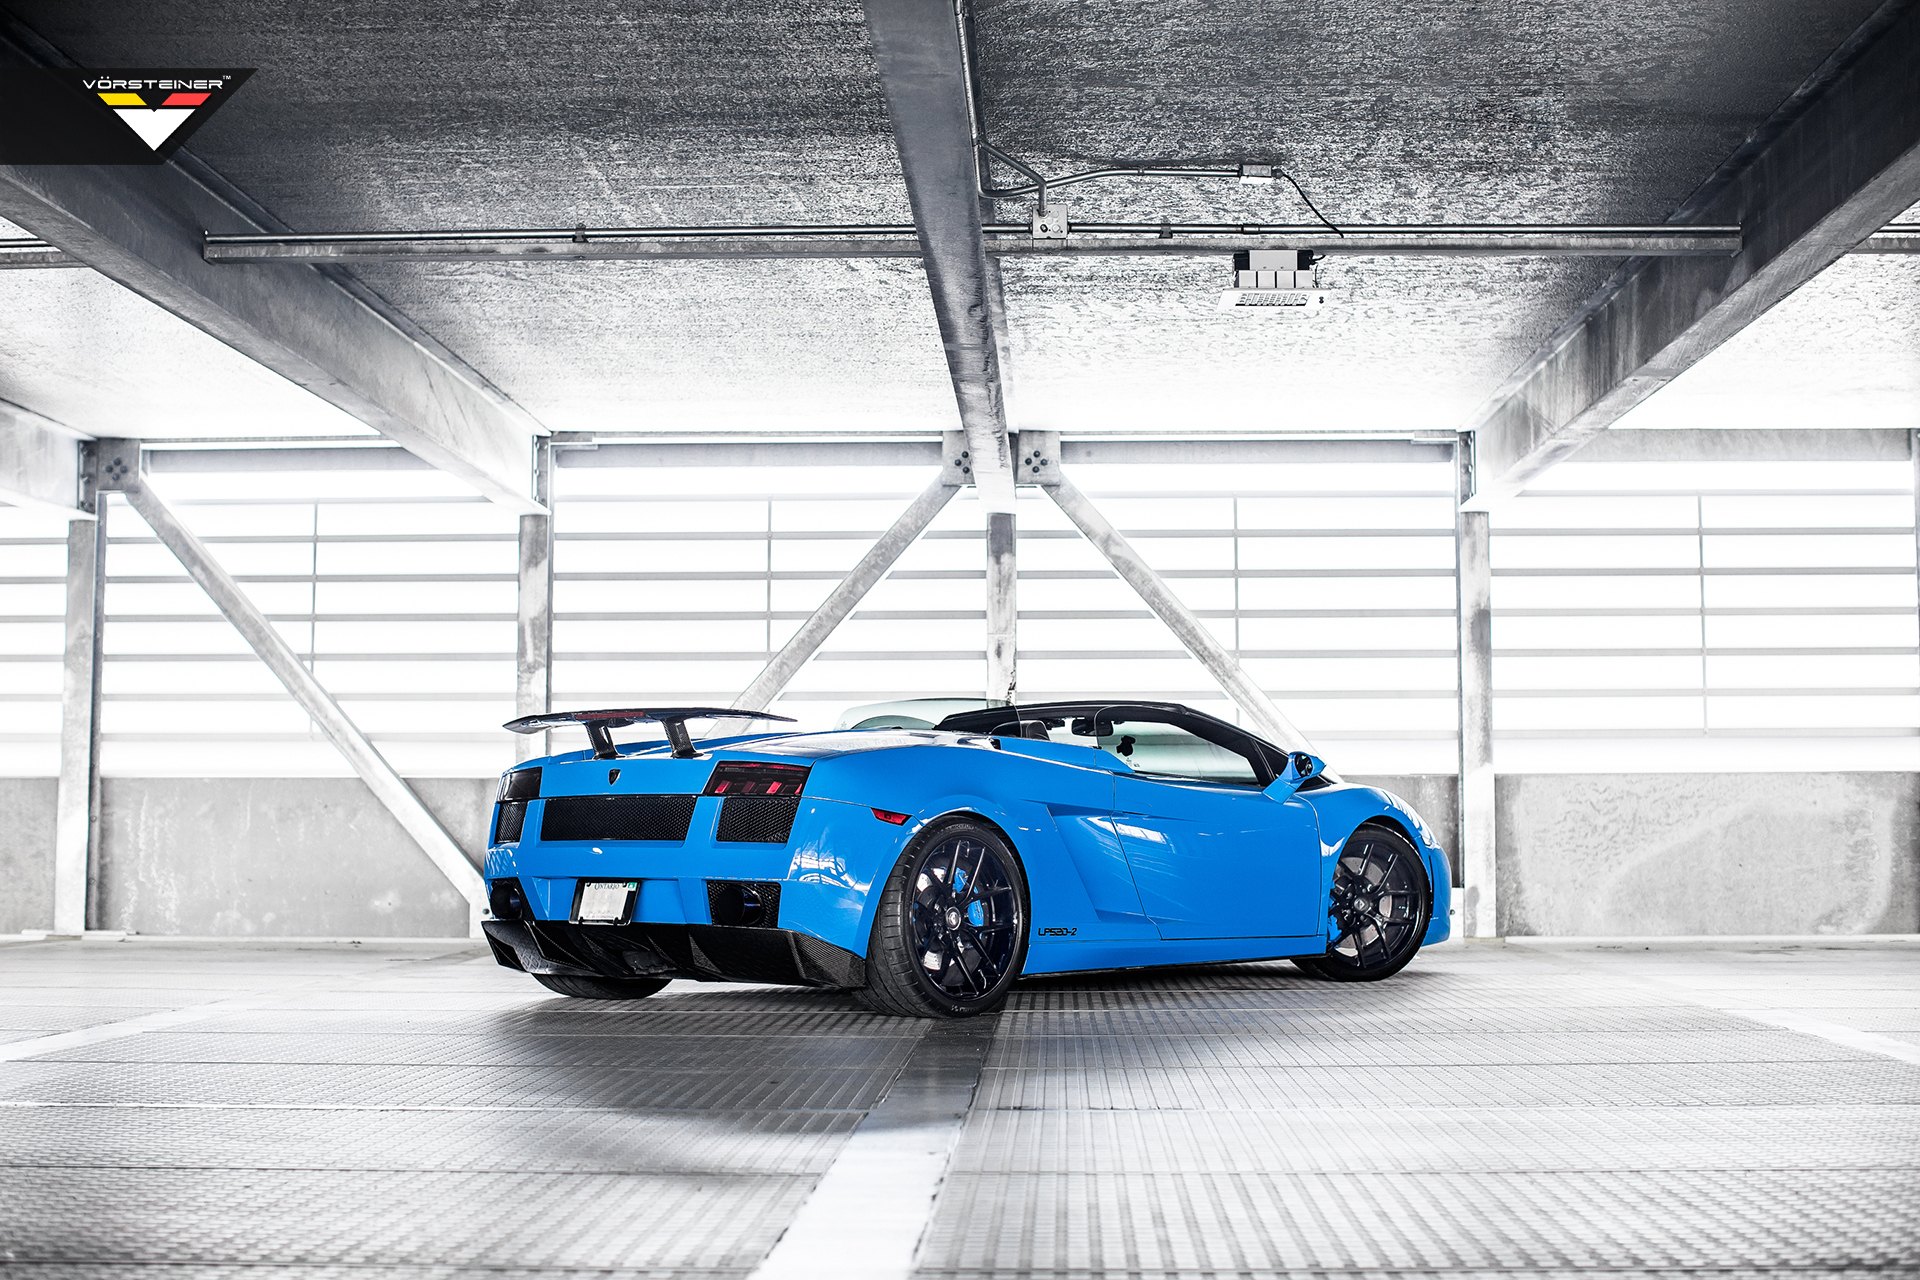 Rear Spoiler with Light on Blue Lamborghini Gallardo - Photo by Vorstiner